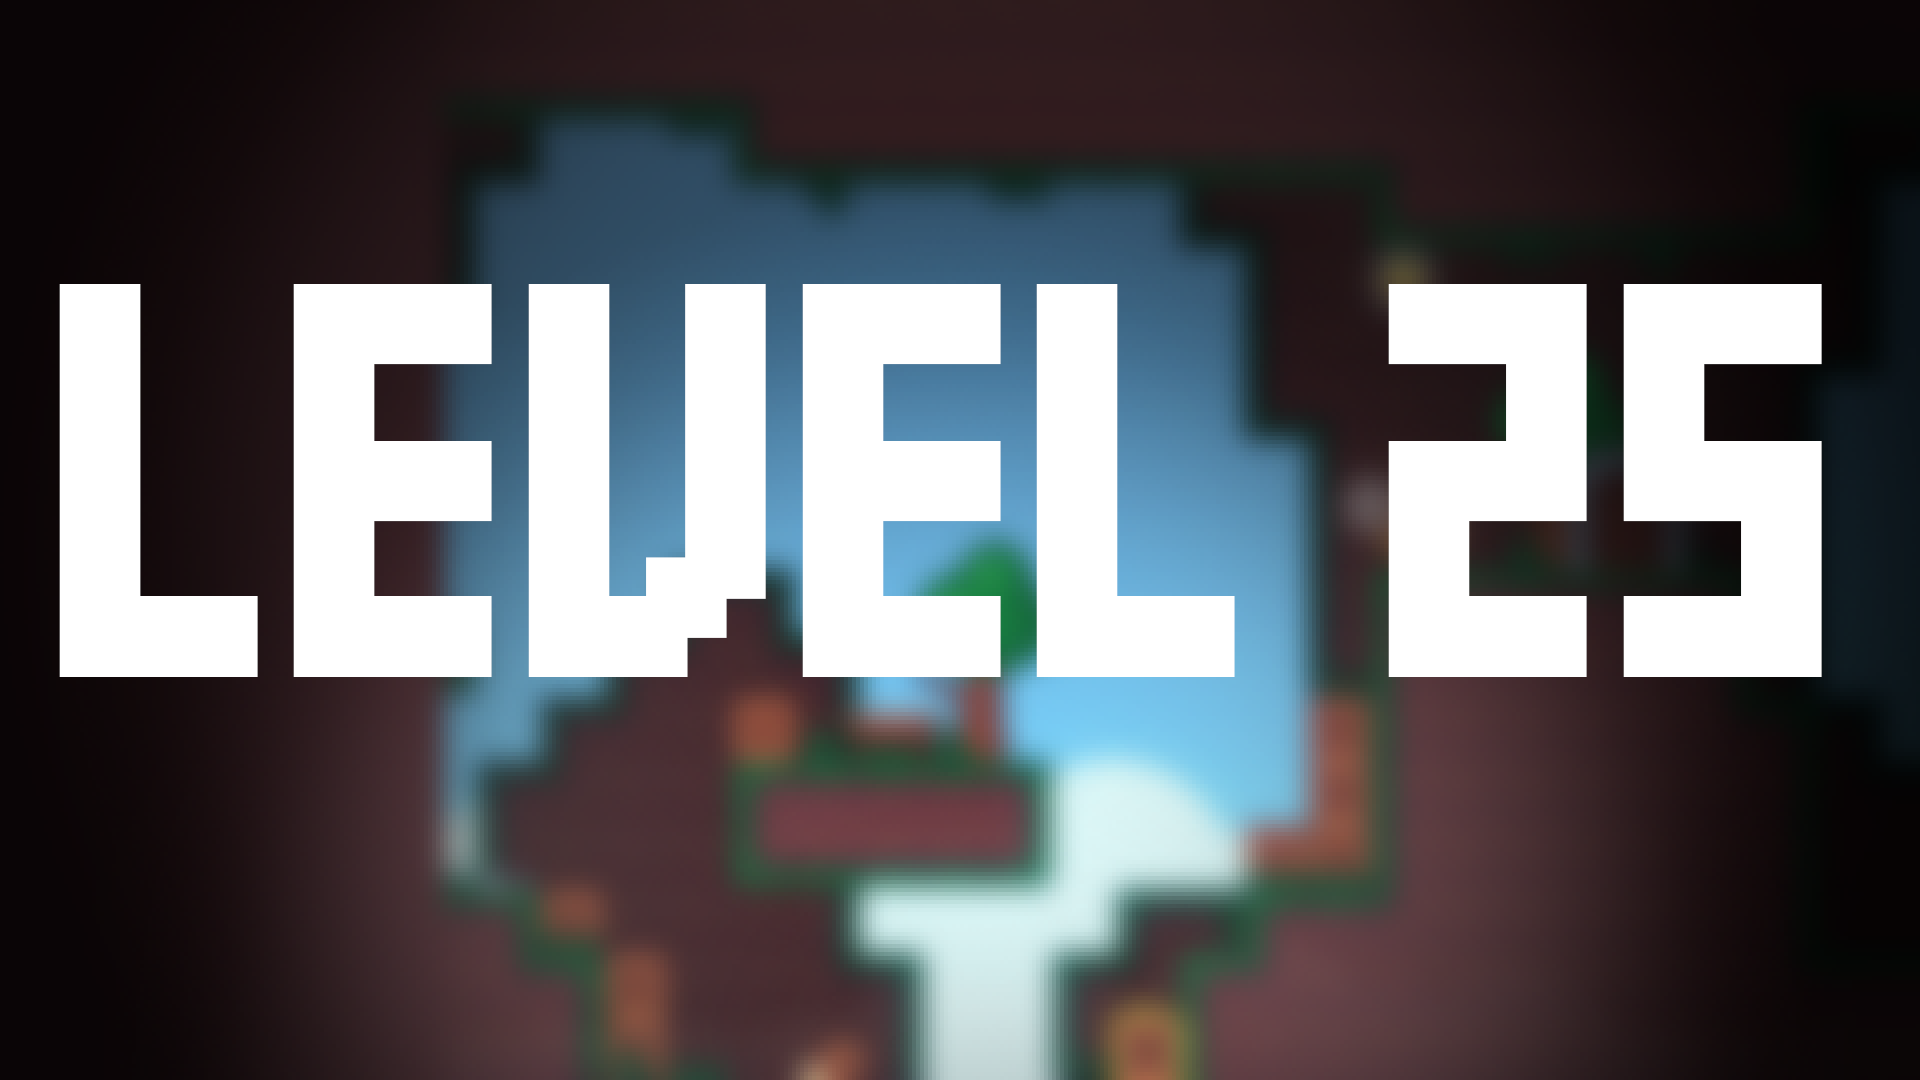 Level 25